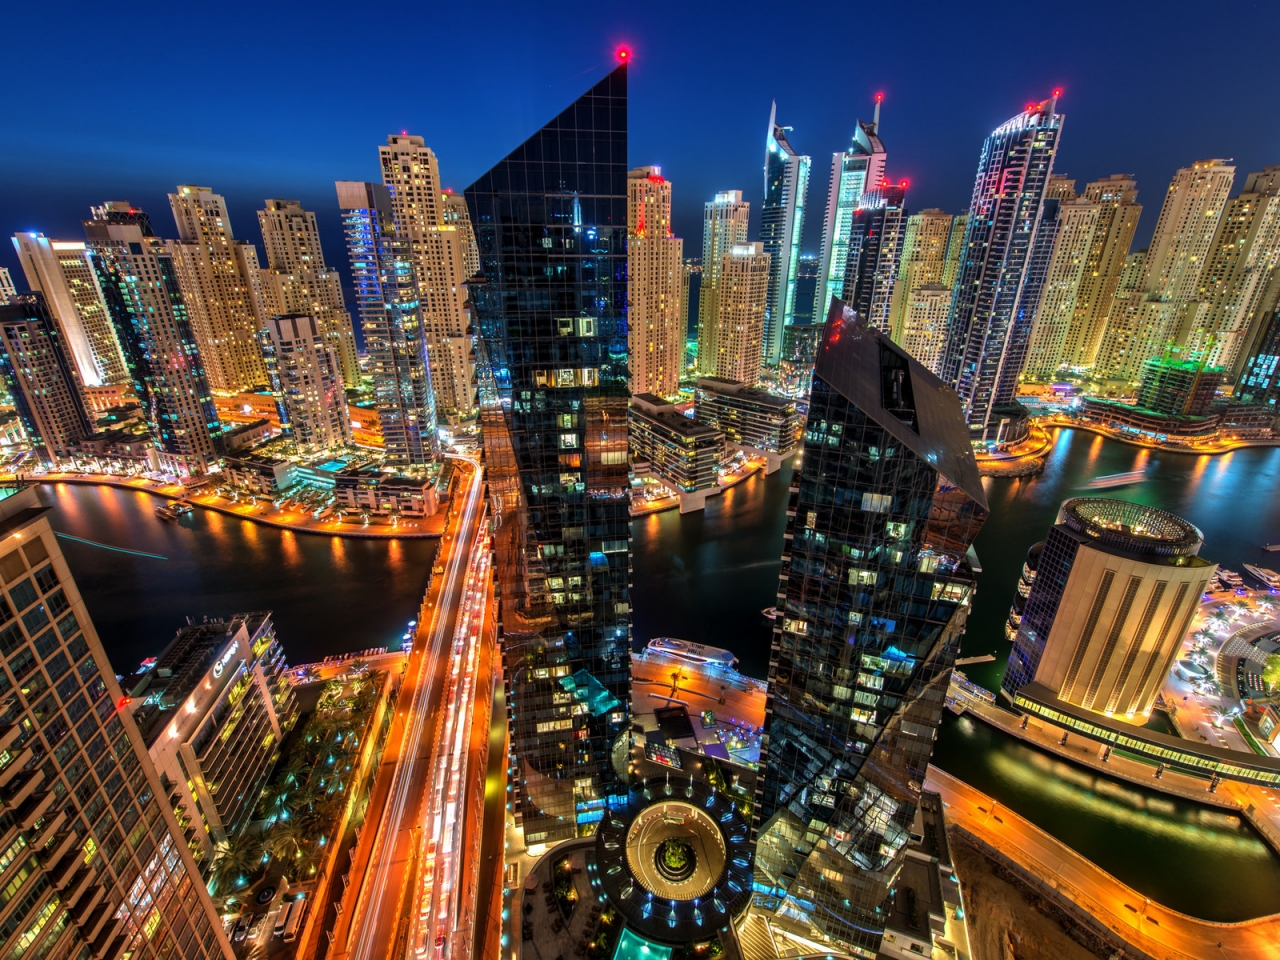 Night in Dubai for 1280 x 960 resolution